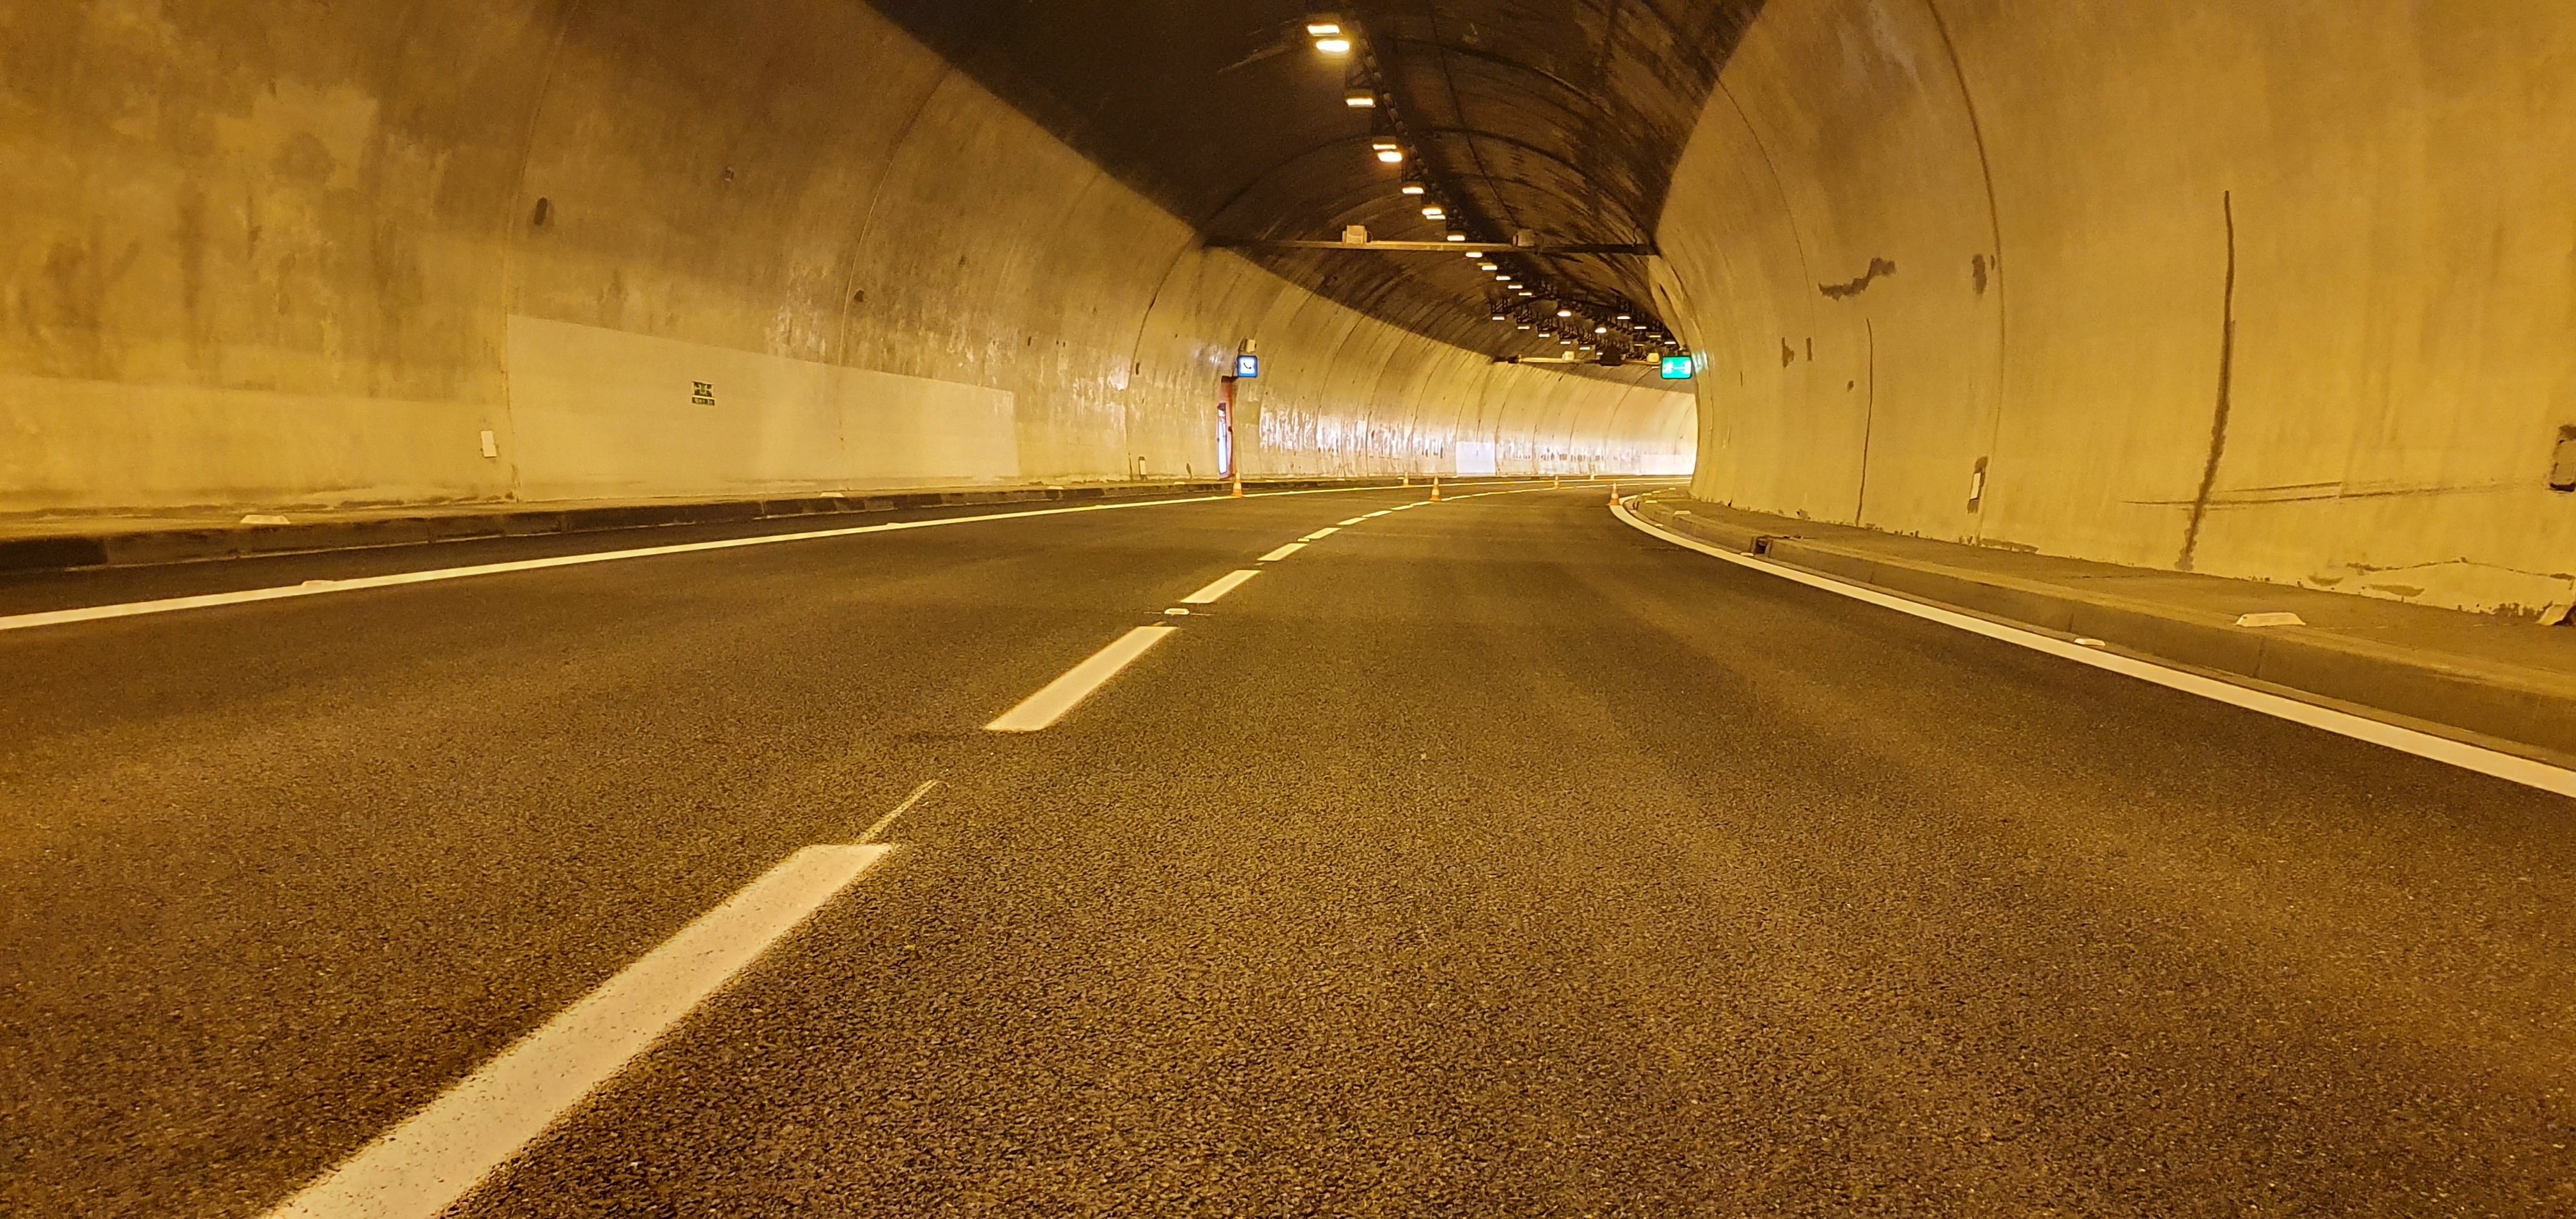 I/23 Pisárecký tunel - Construcția de drumuri & poduri